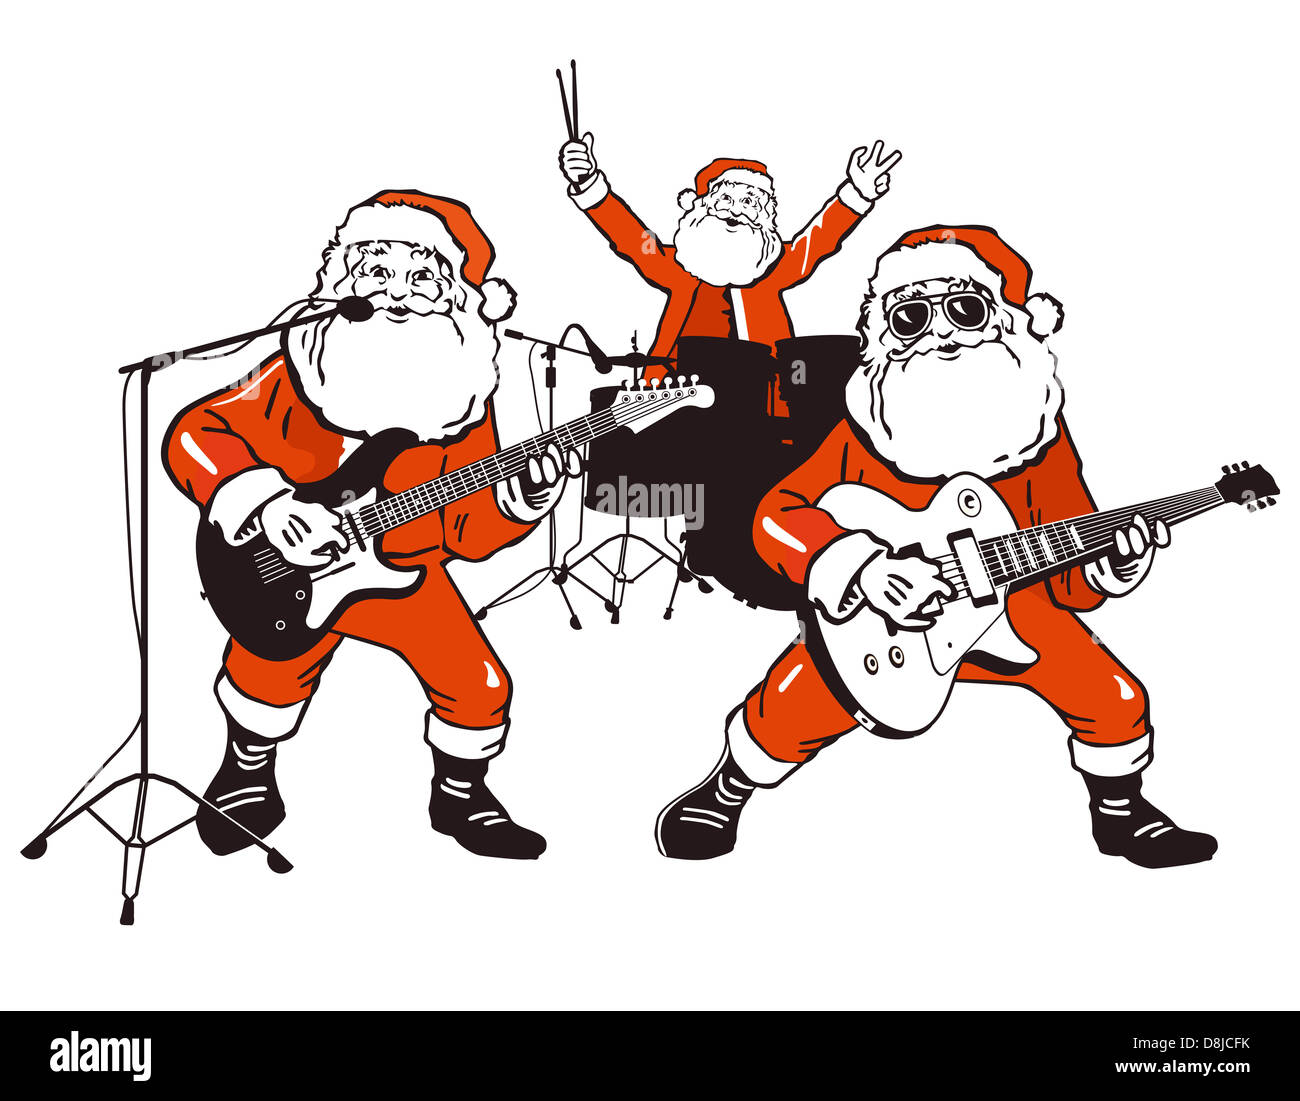 Santa Claus rock band isolated on white Stock Photo